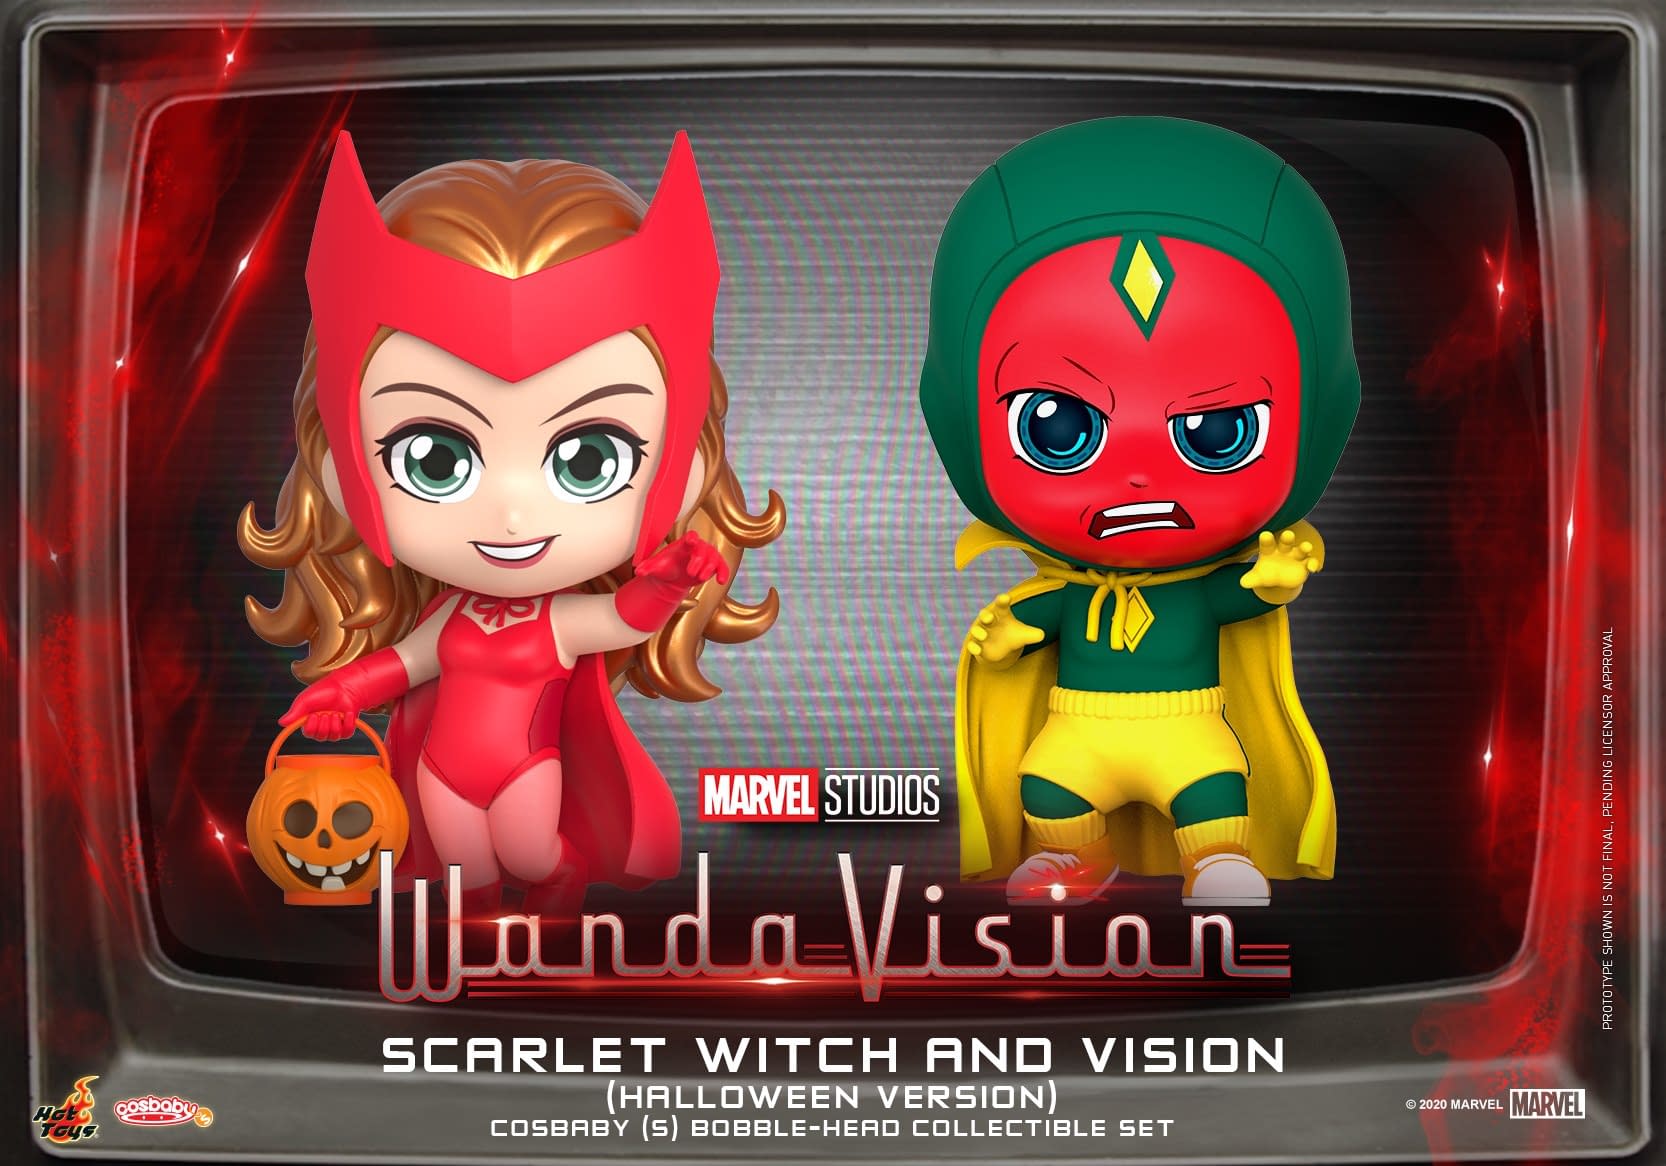 WandaVision Take on Halloween with New Hot Toys Set